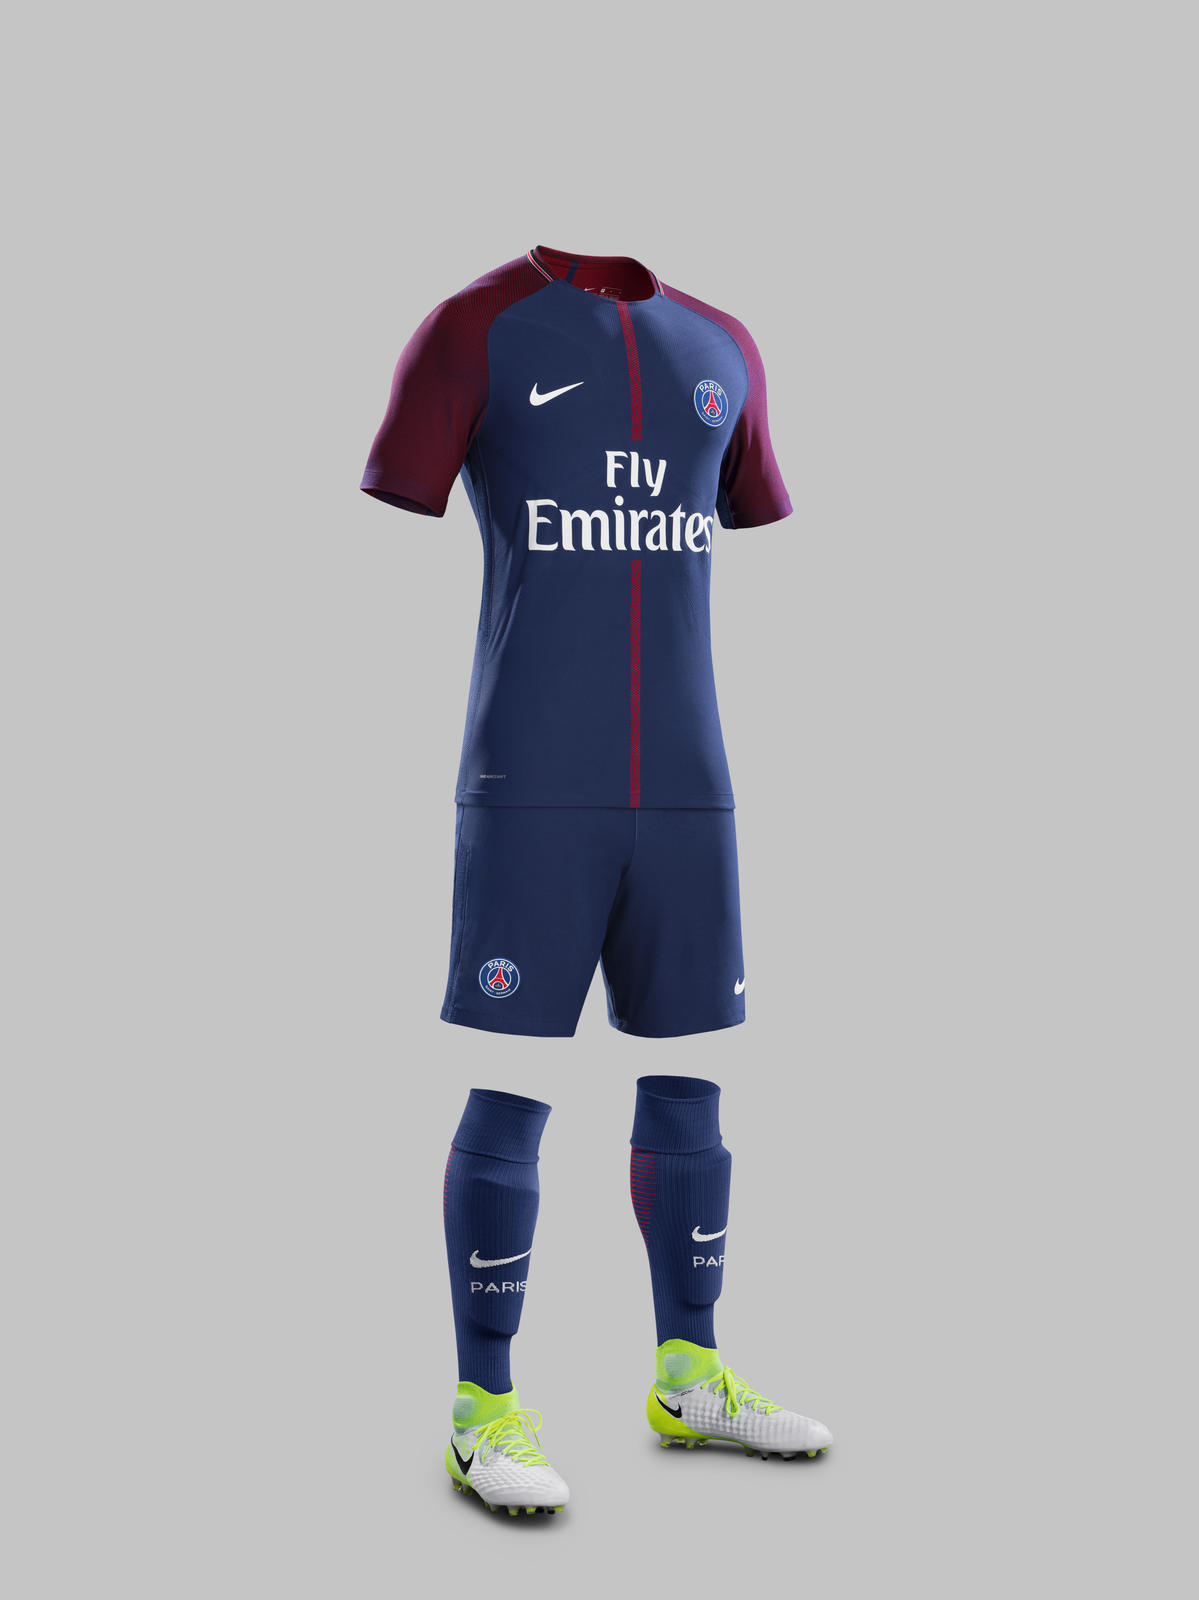 Paris Saint-Germain 2017-18 Nike Home Kit - Football Shirt Culture 